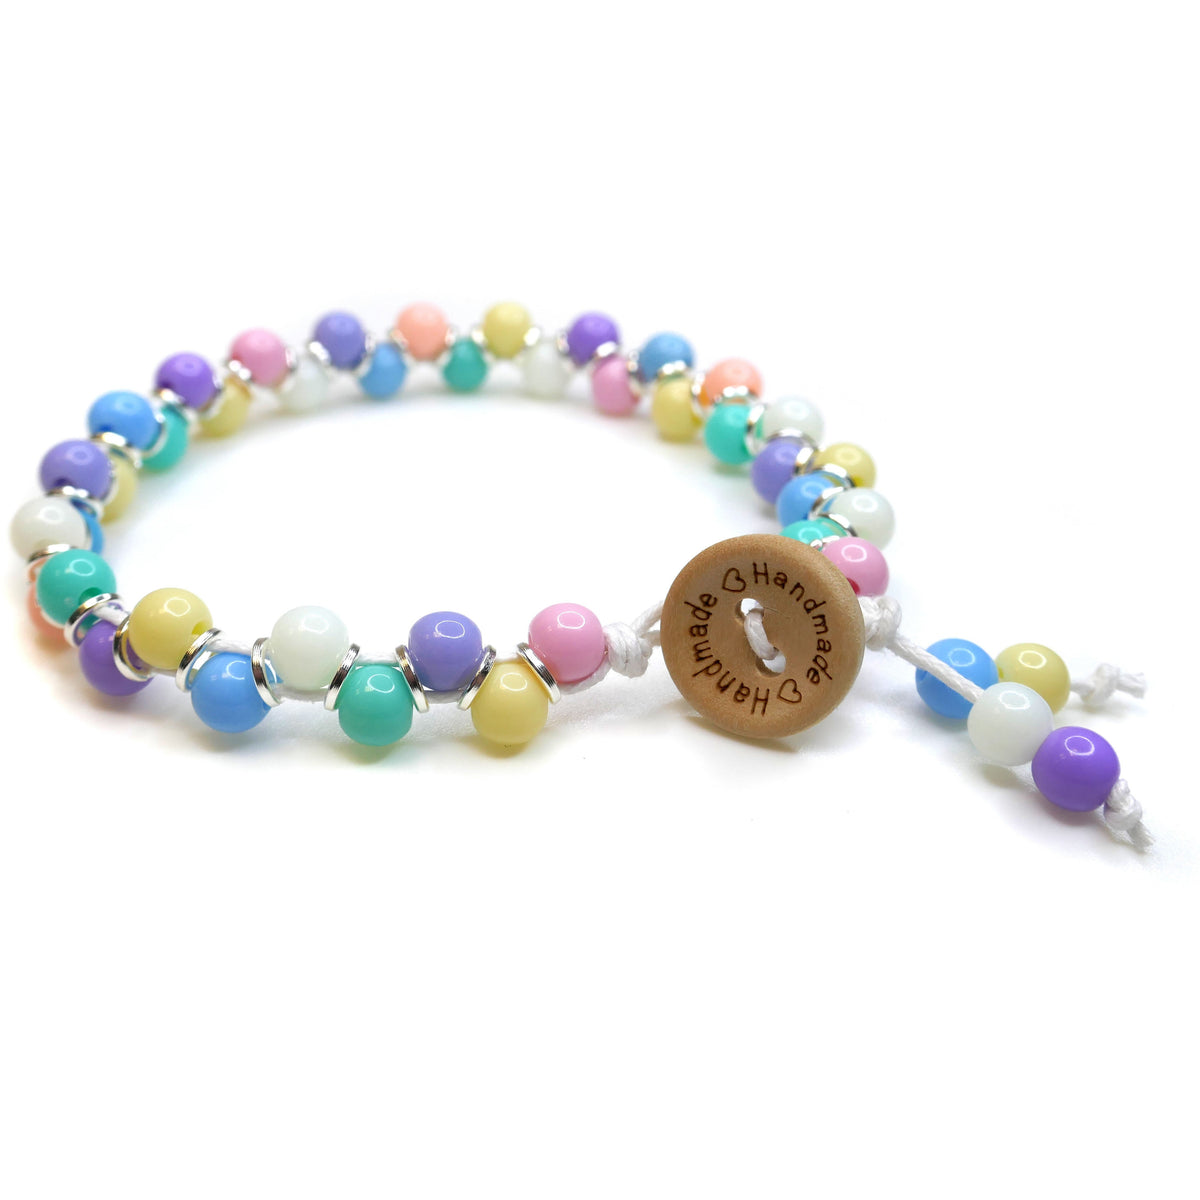 Jewellery Kit, Beaded Name Bracelet, Be Happy, Rainbow Bracelet Making Kit,  Make Your Own Bracelet Gift, Bee Happy Party Bag Idea, Craft Kit - Etsy